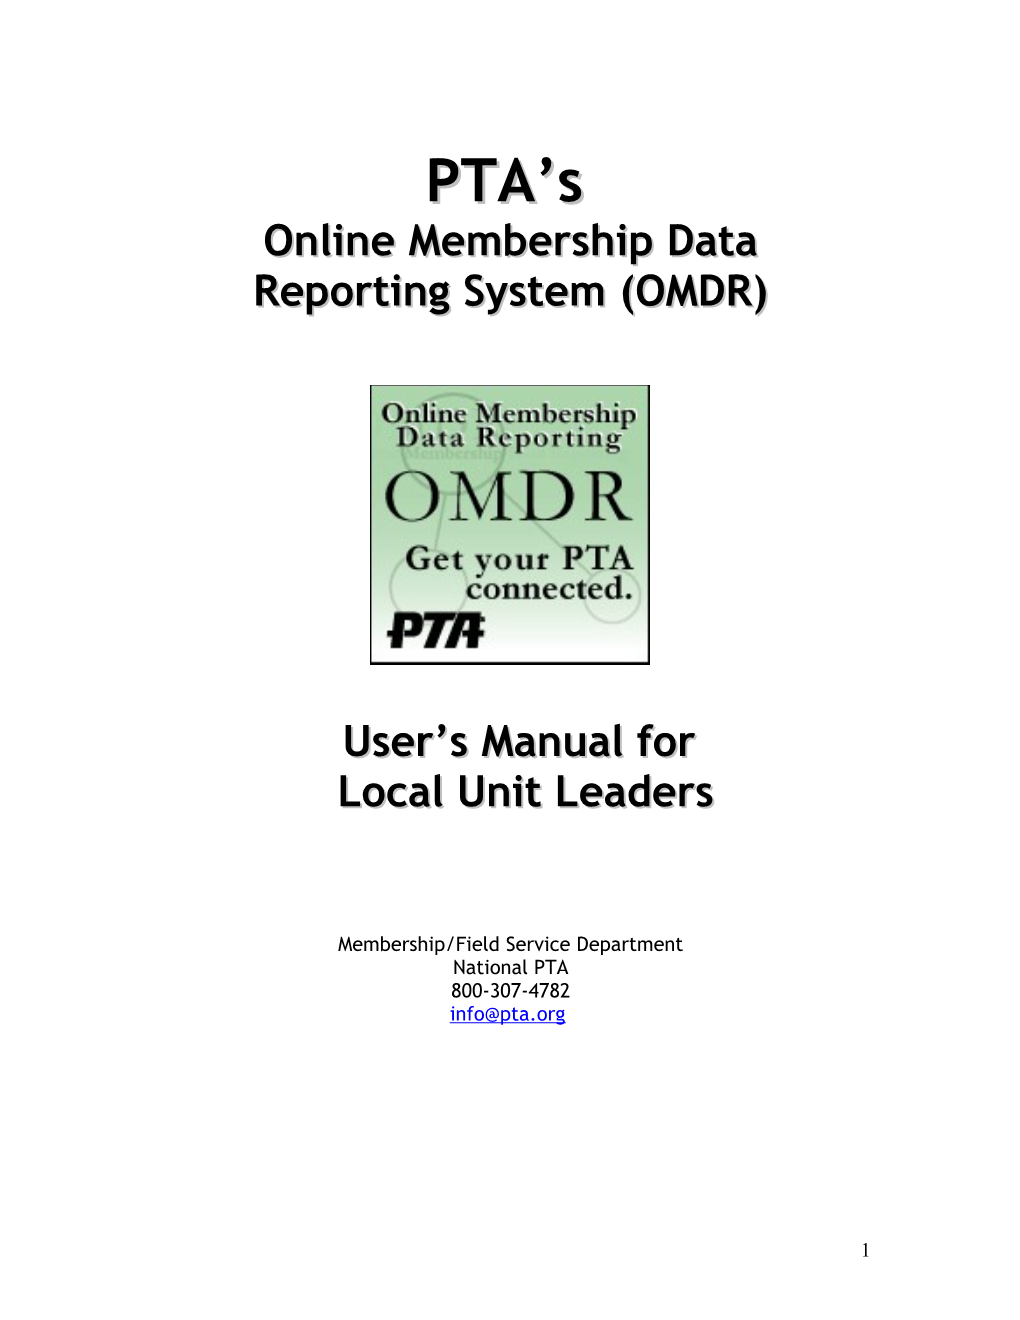 PTA S Online Membership and Dues